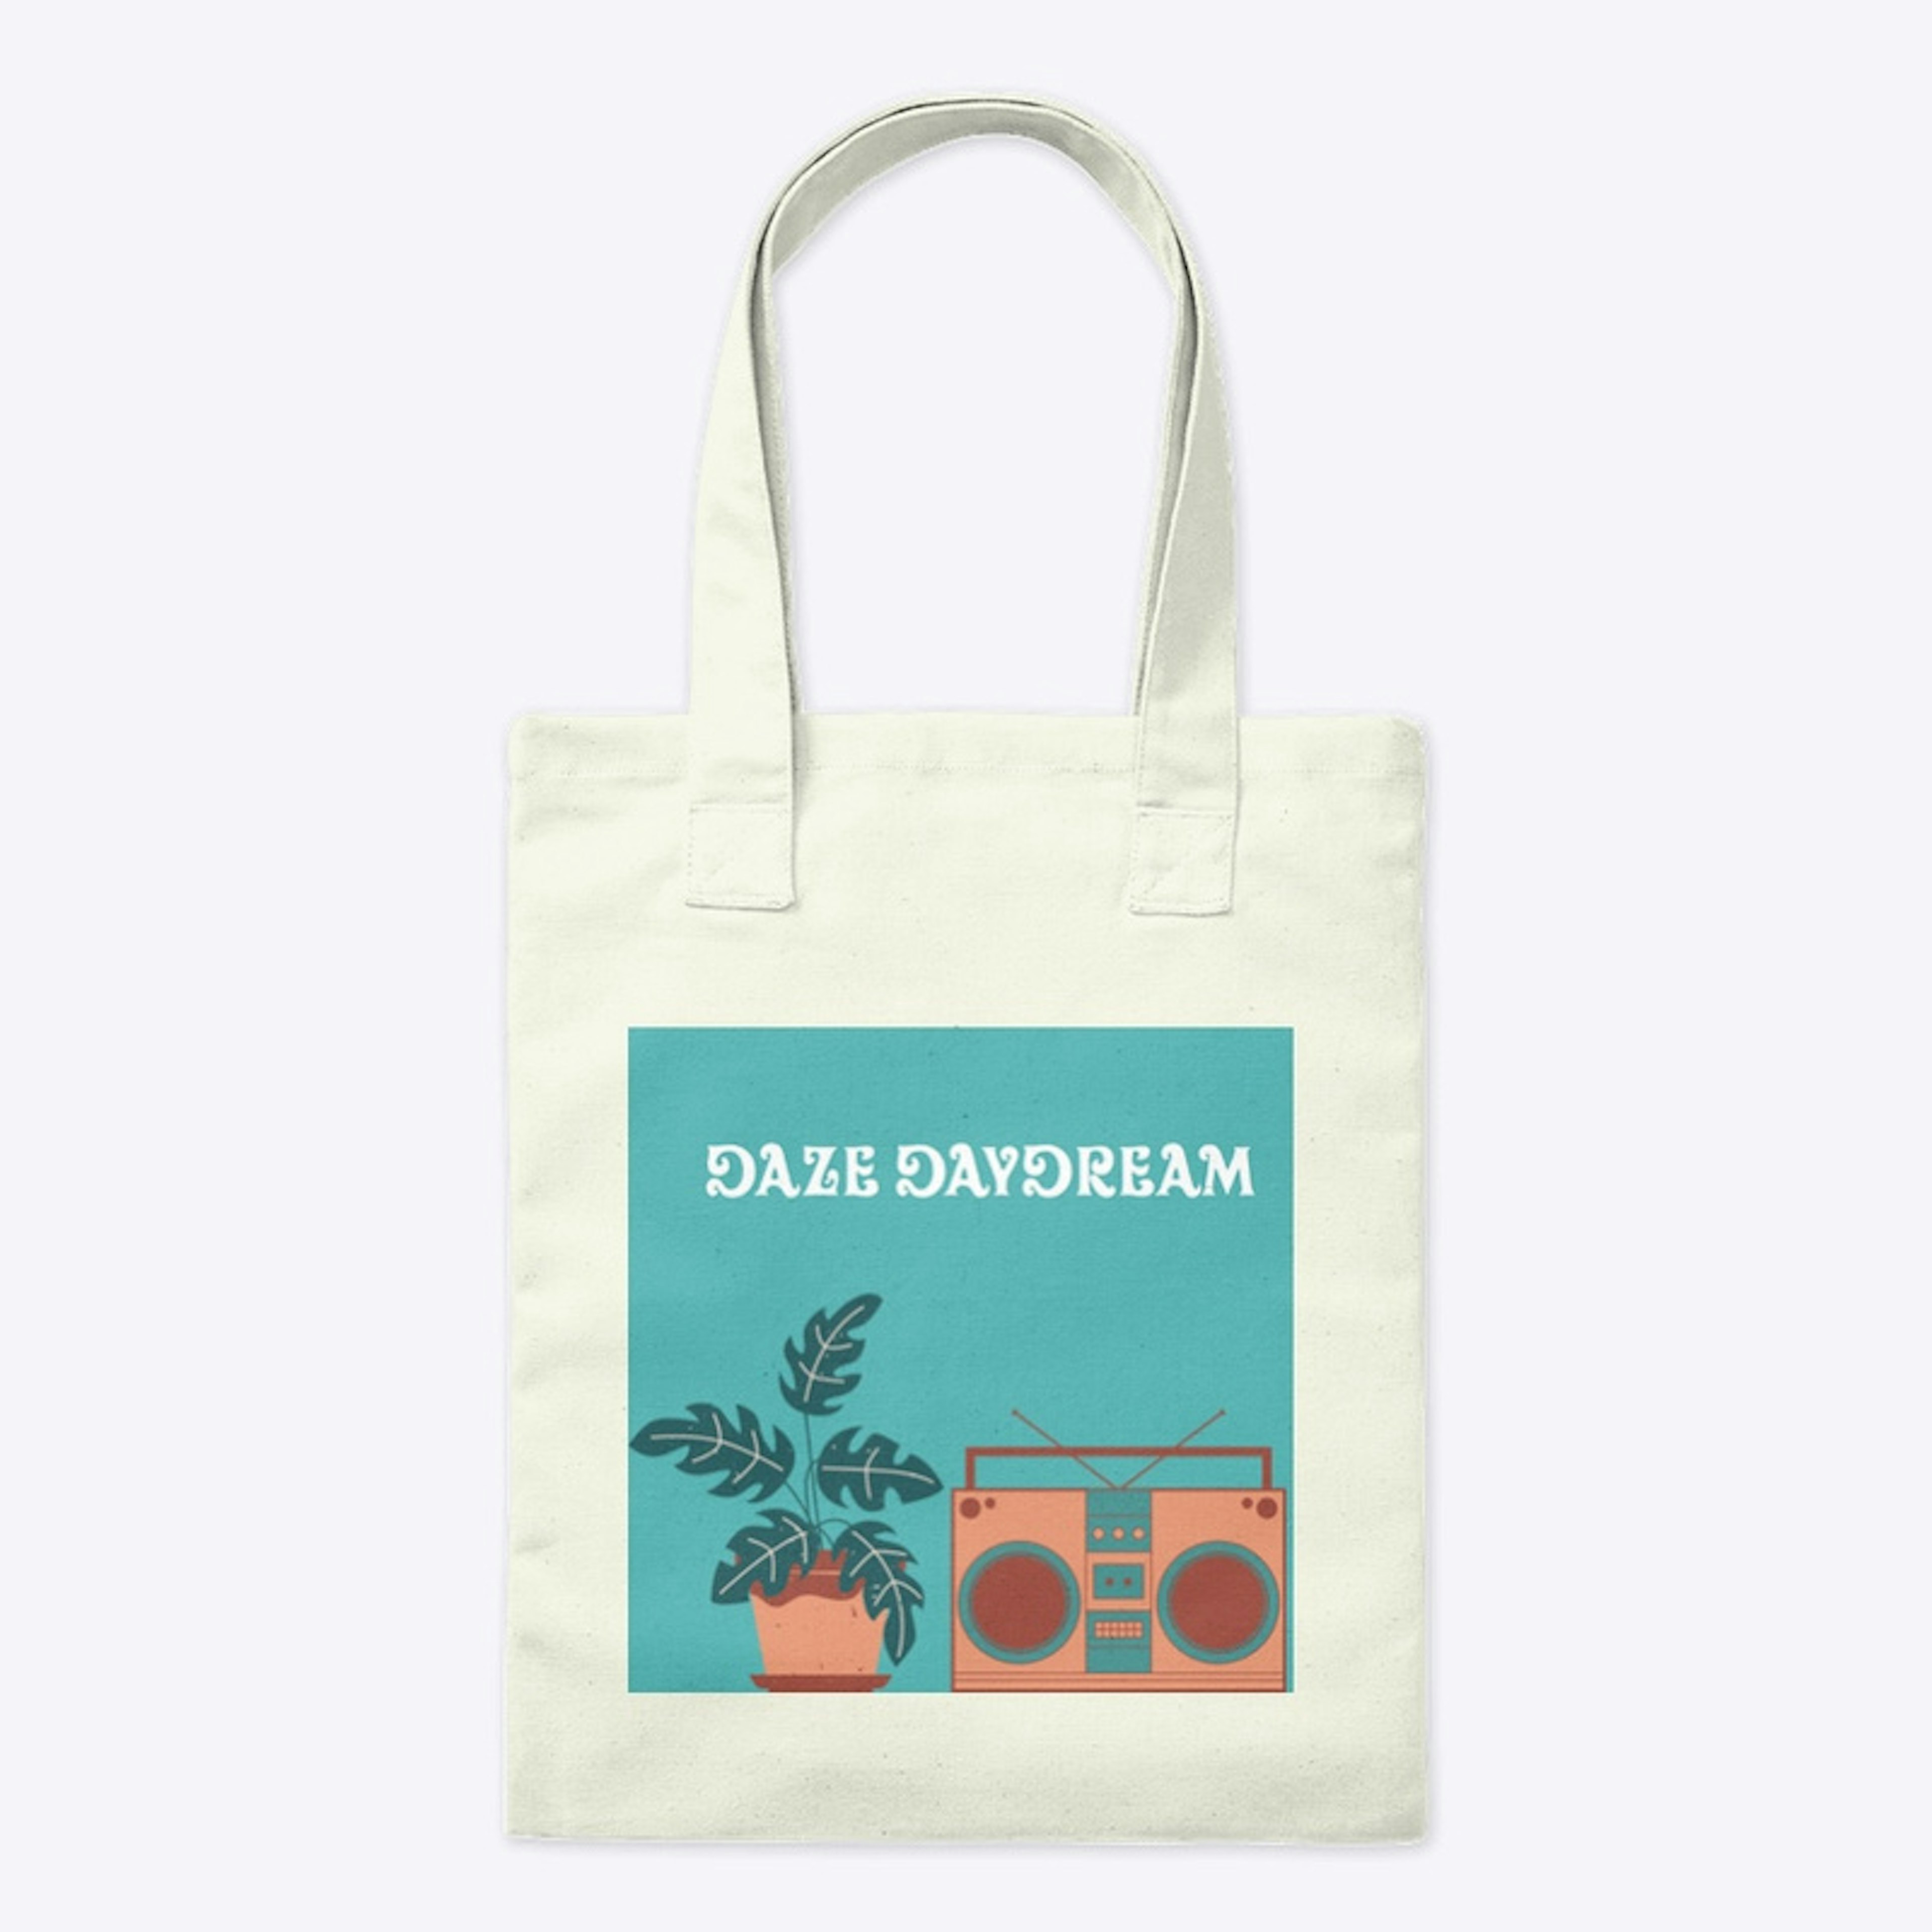 Daze Daydream 